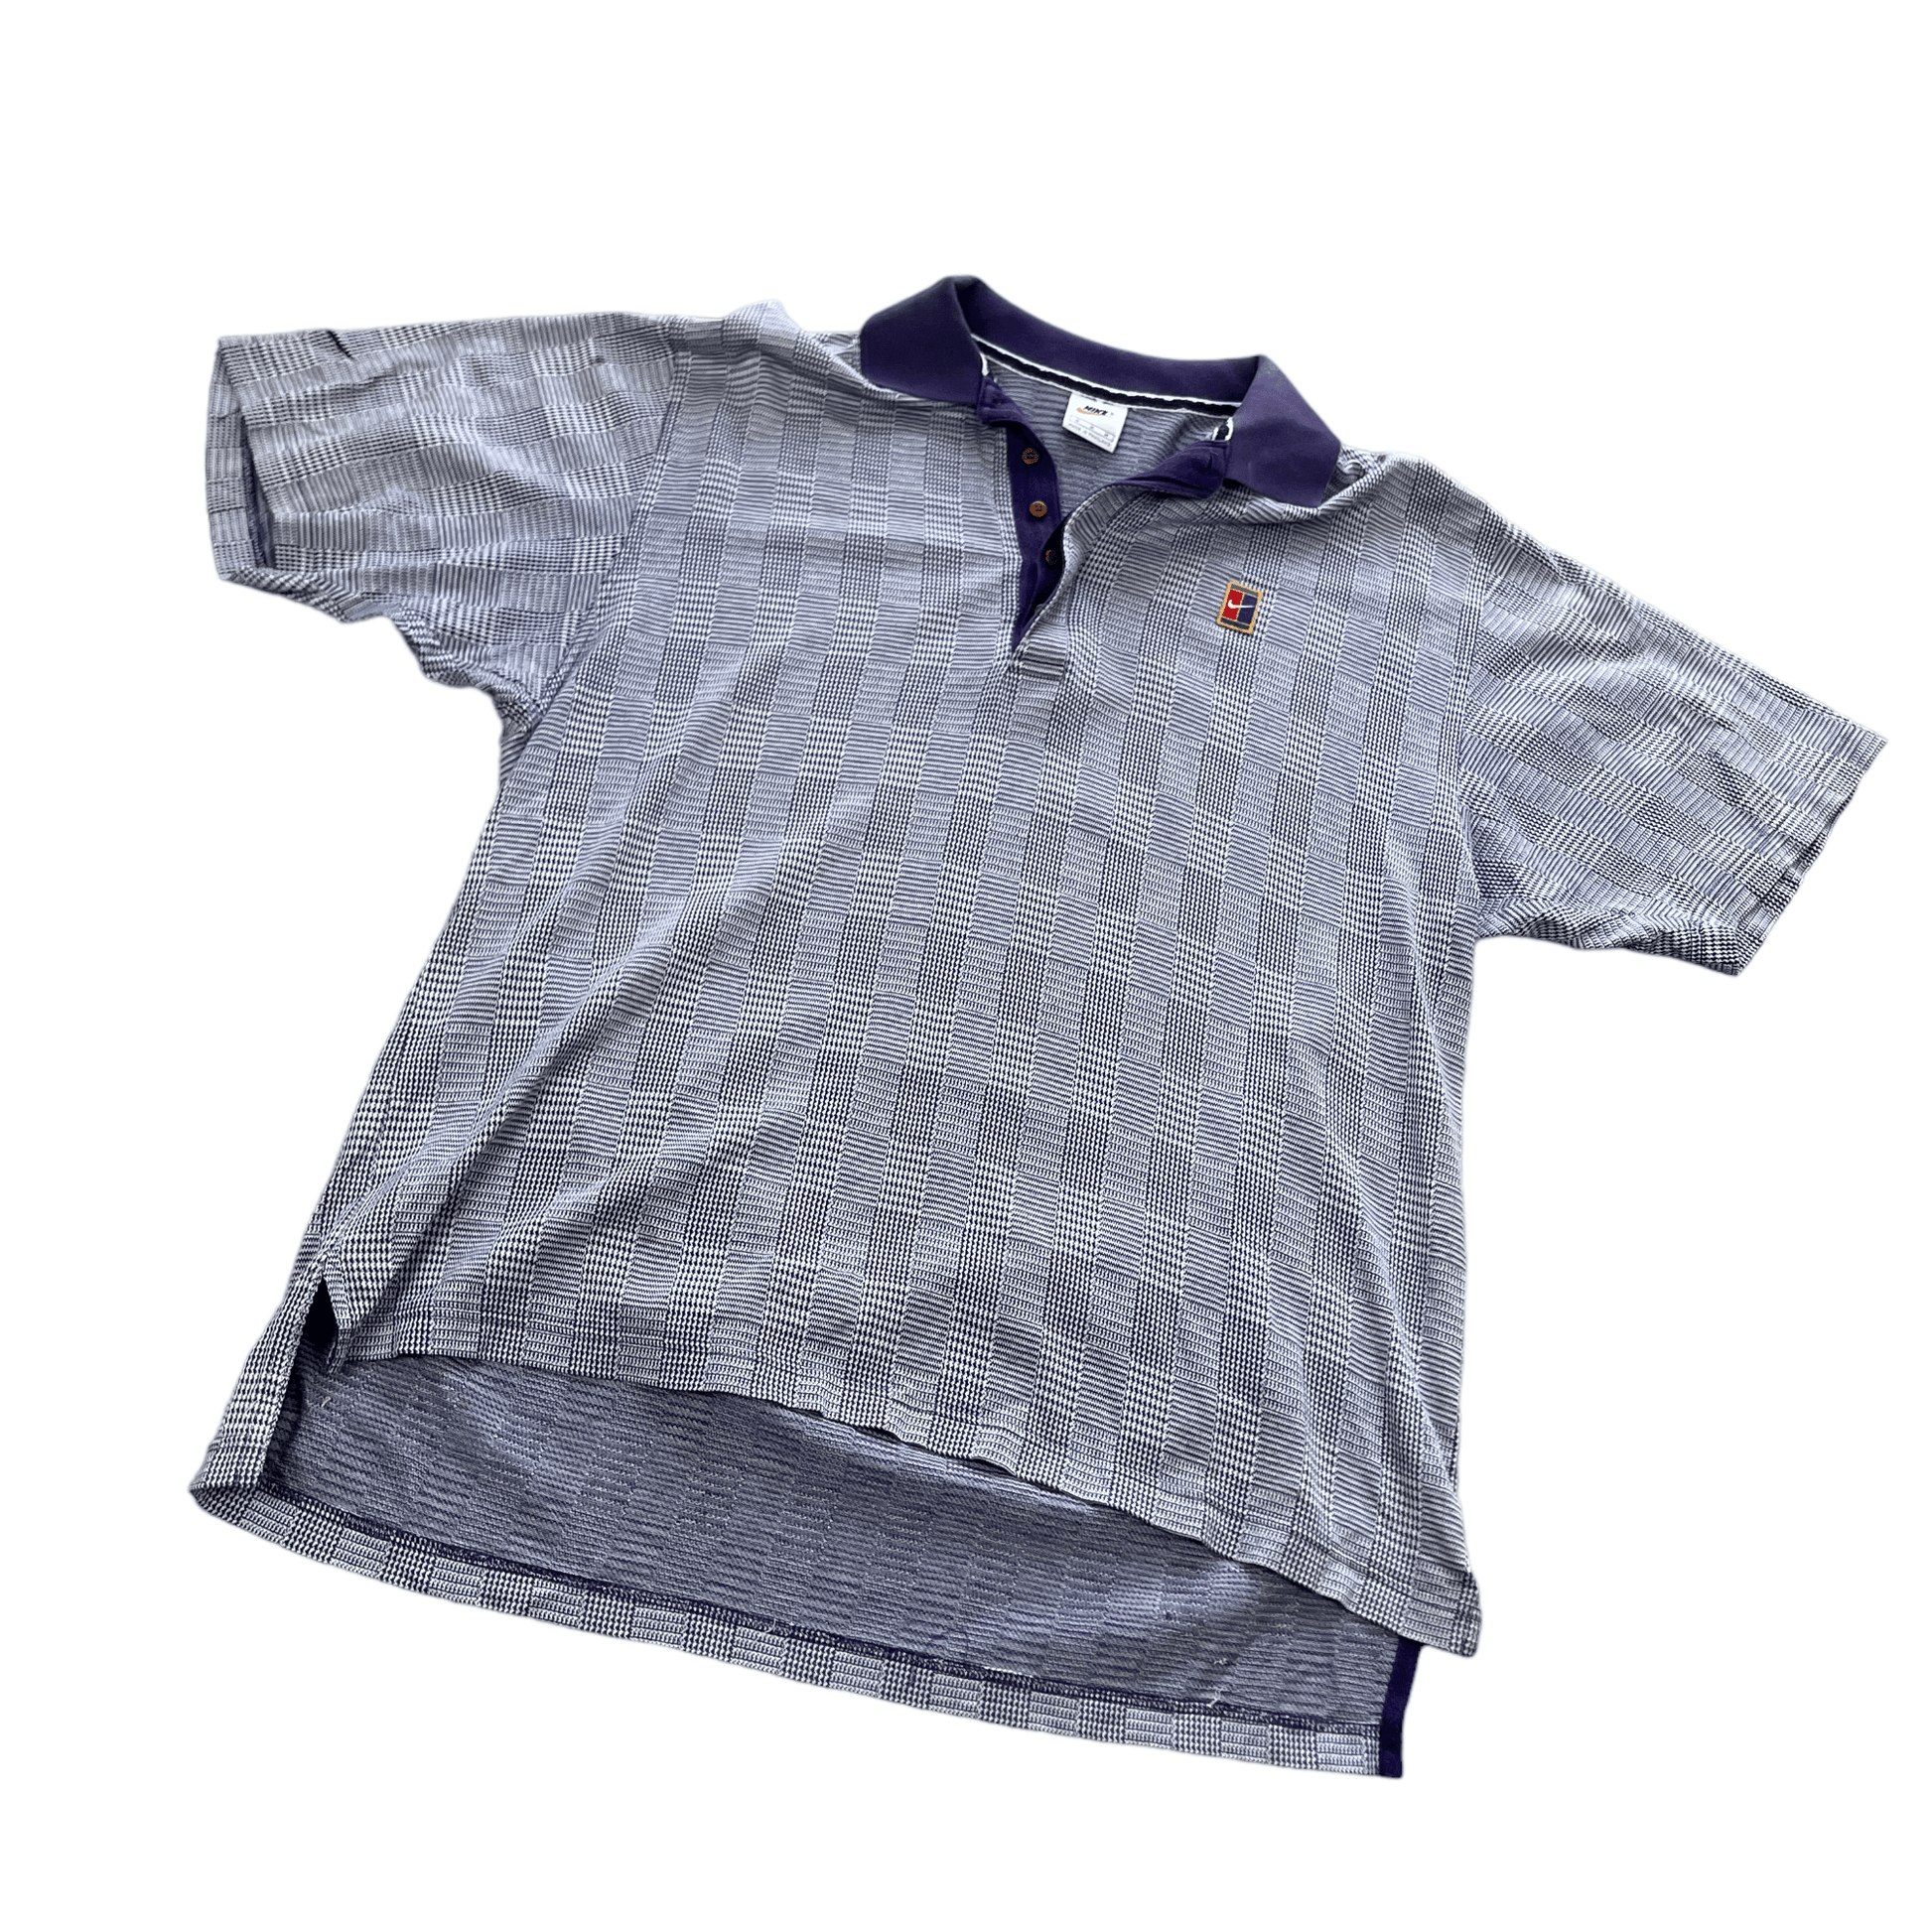 Vintage 90s Purple Nike Court Polo Shirt - Medium - The Streetwear Studio